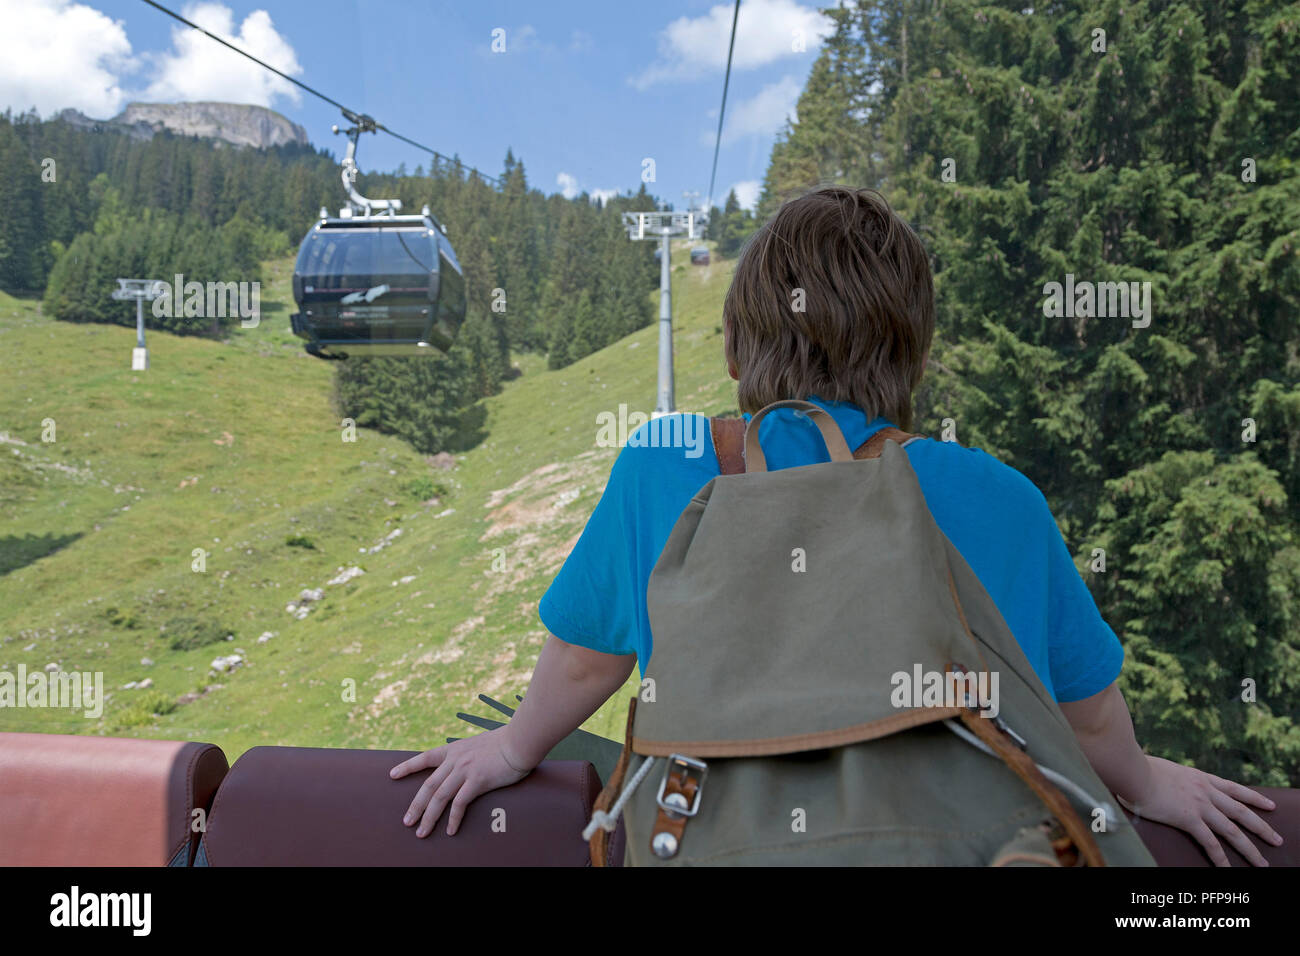 boy in the cable car, Hoher Ifen near Hirschegg, little Walser valley, Austria Stock Photo